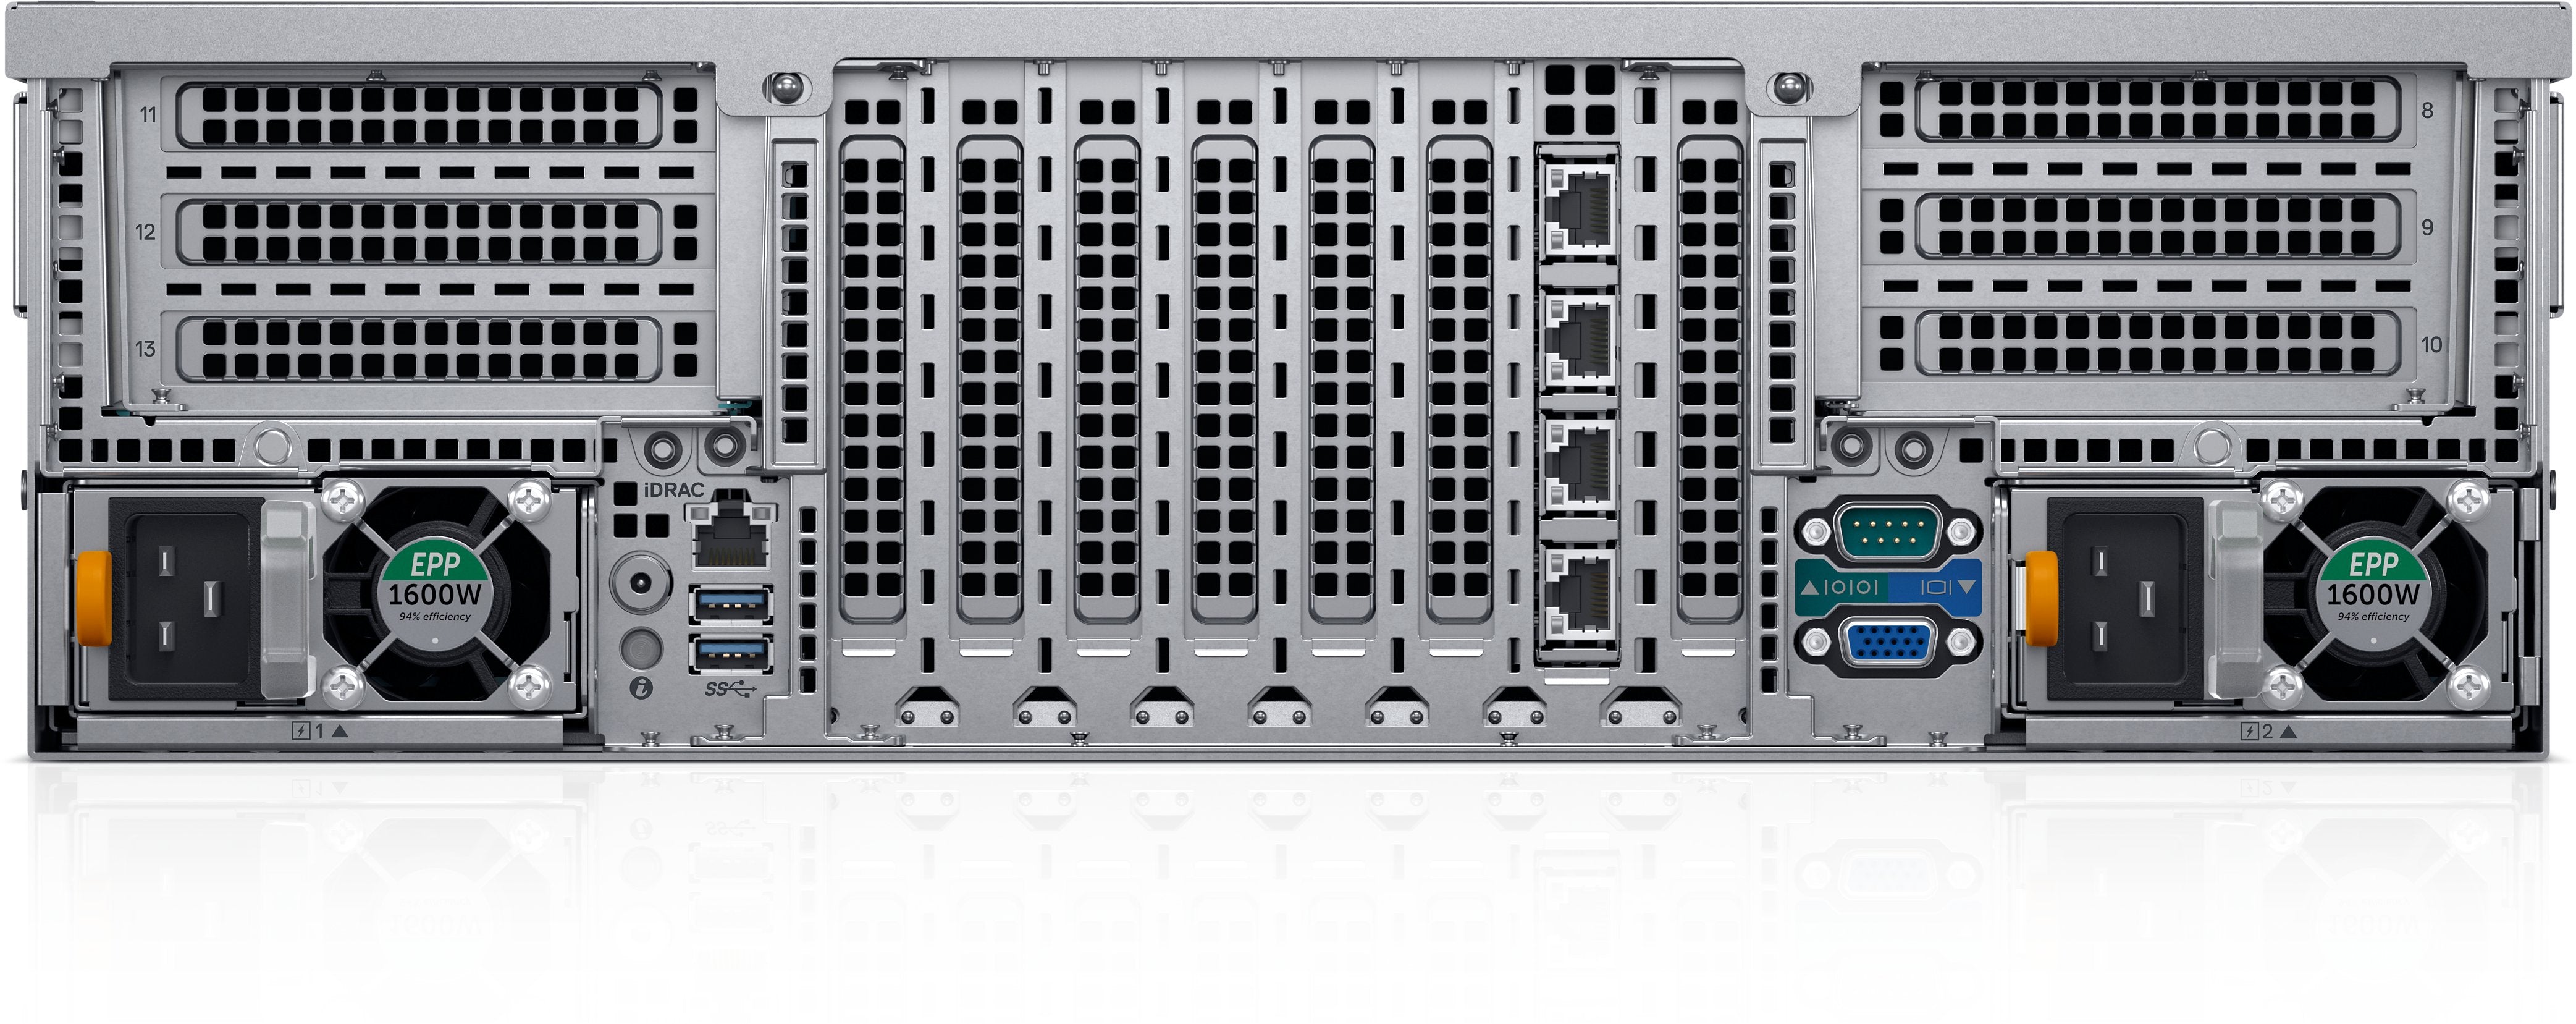 PowerEdge R940 Rack Server - Benson Computers